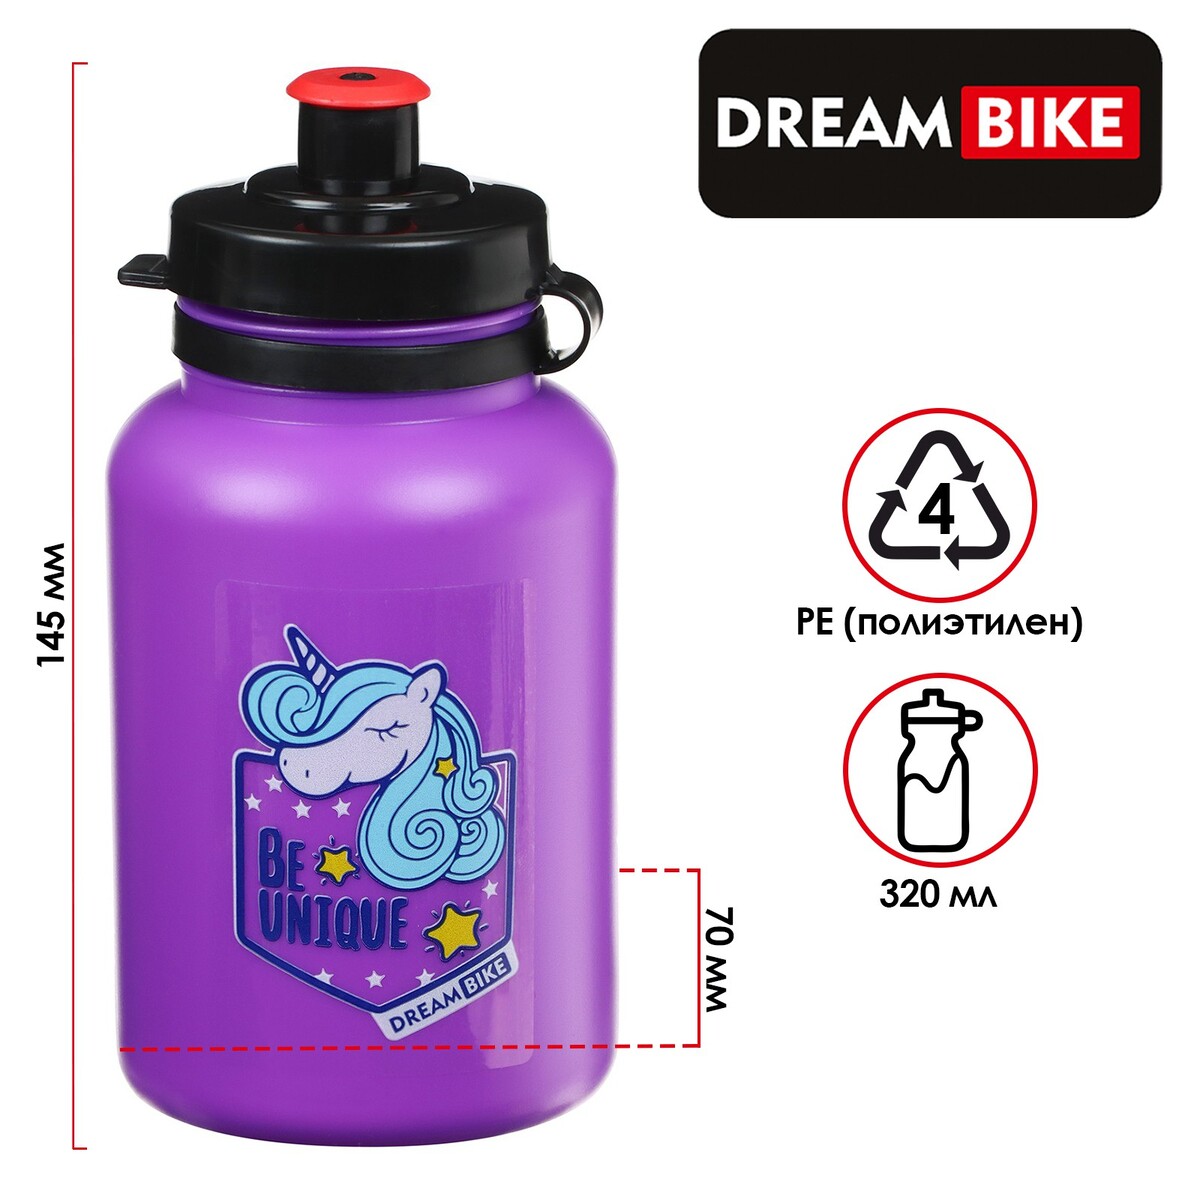 Велофляга dream bike, с флягодержателем, 320 мл, цвет фиолетовый велофляга stg с флягодержателем х95405